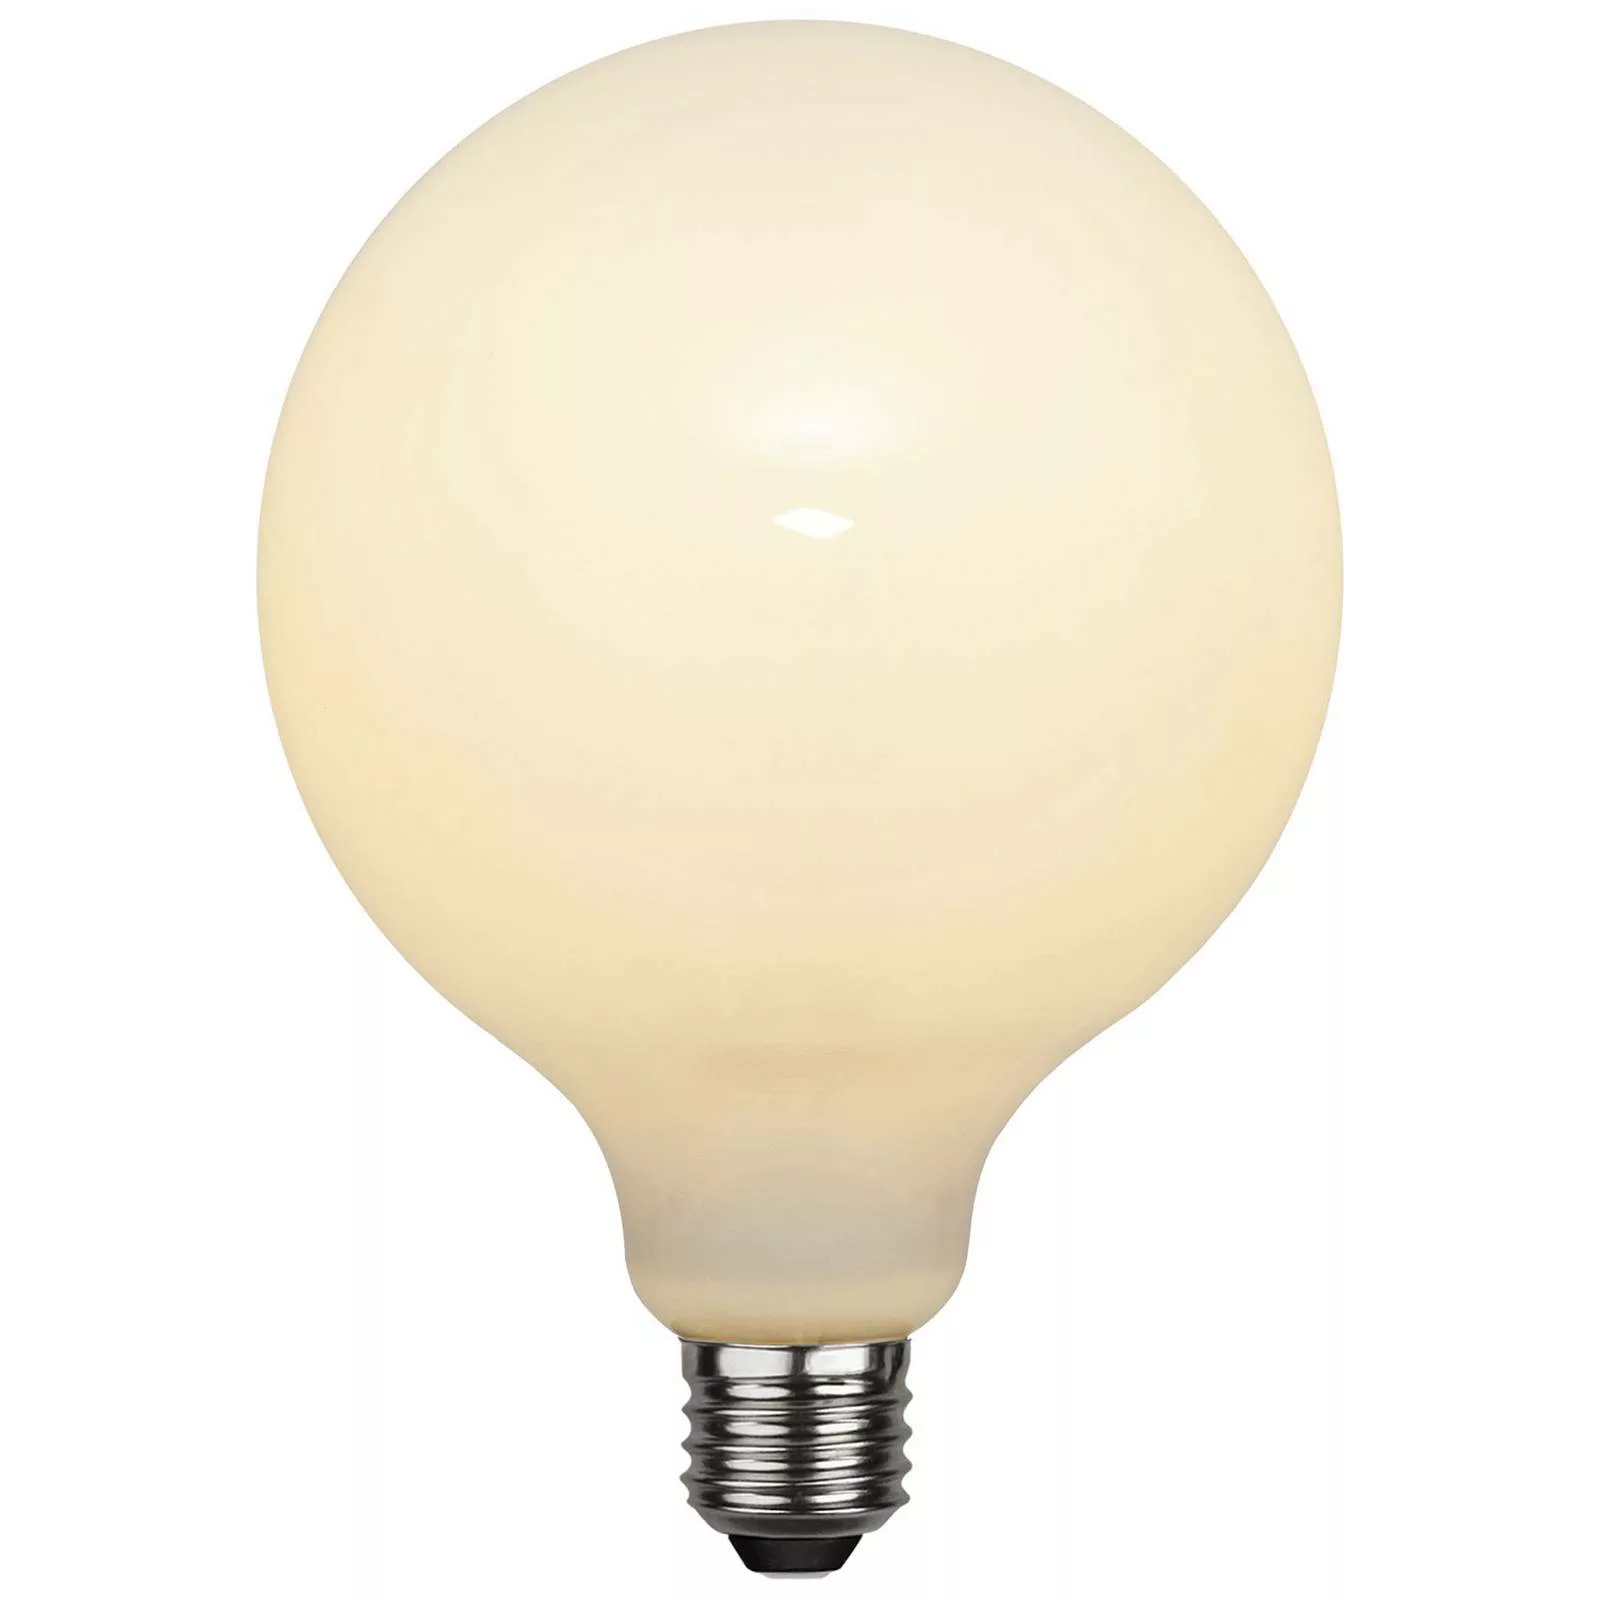 LED-Globelampe E27 G125 7,5W 3-step-dim, opal günstig online kaufen